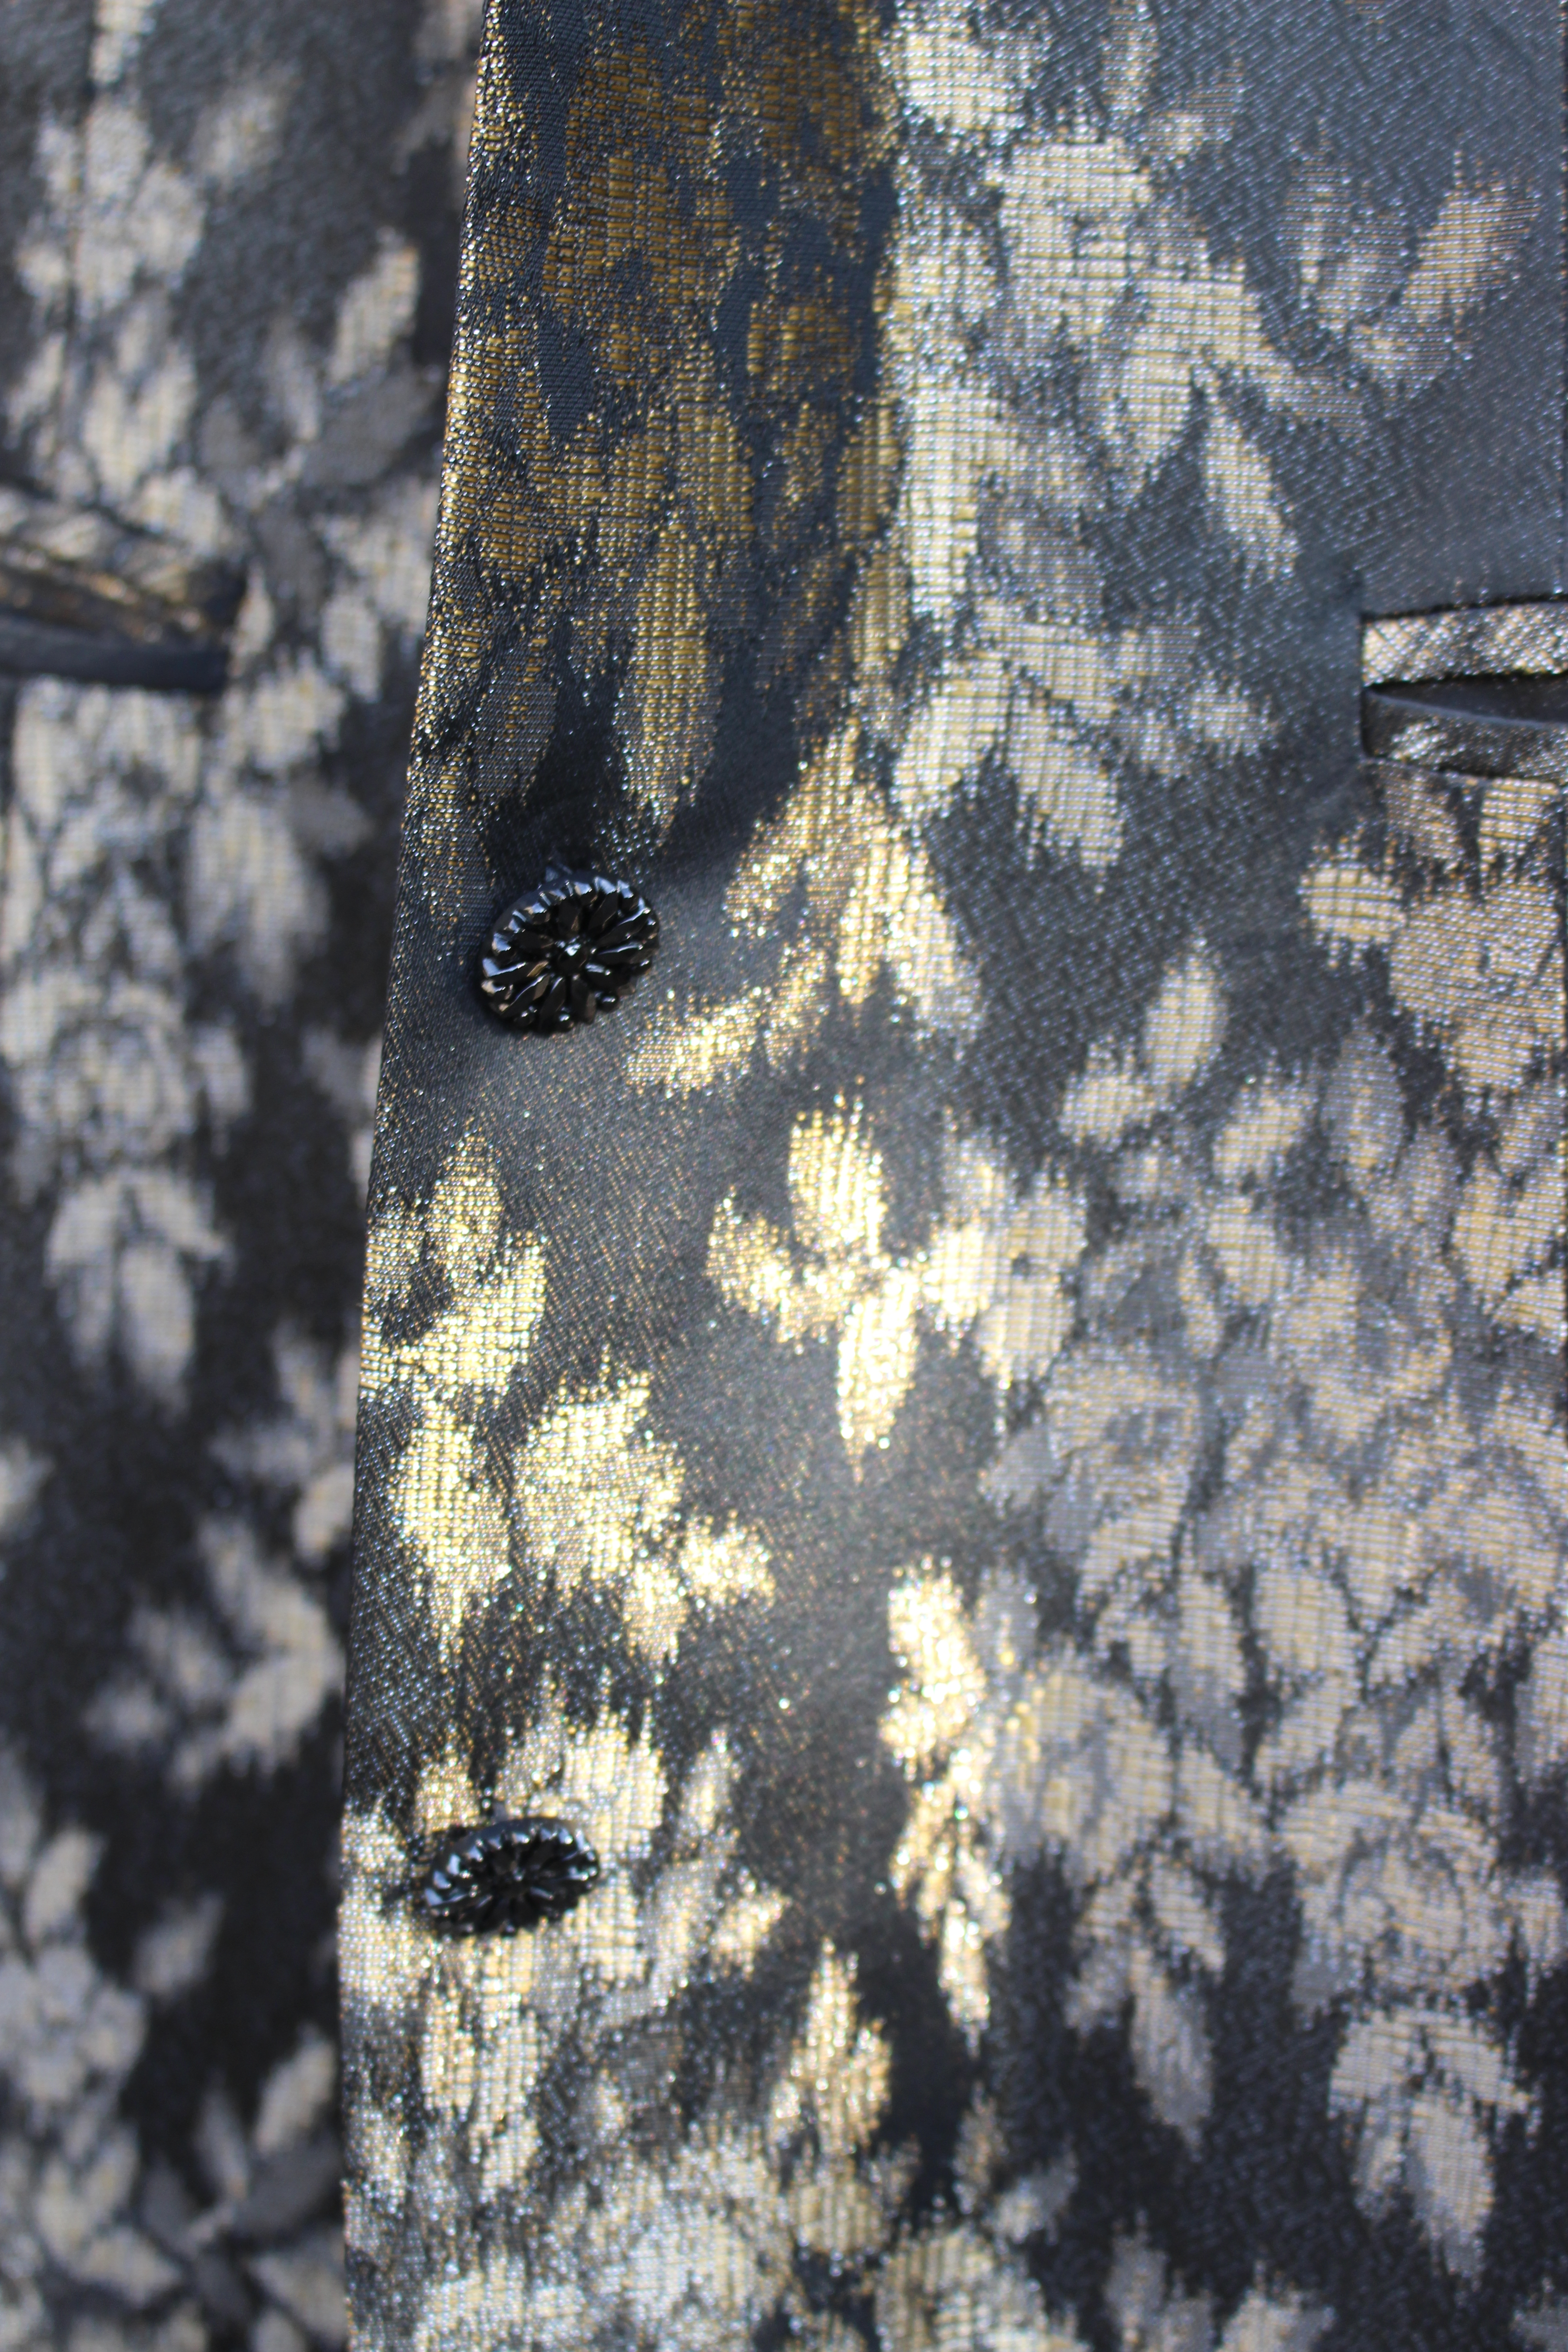 Black and gold brocade jacket, showing detail of design